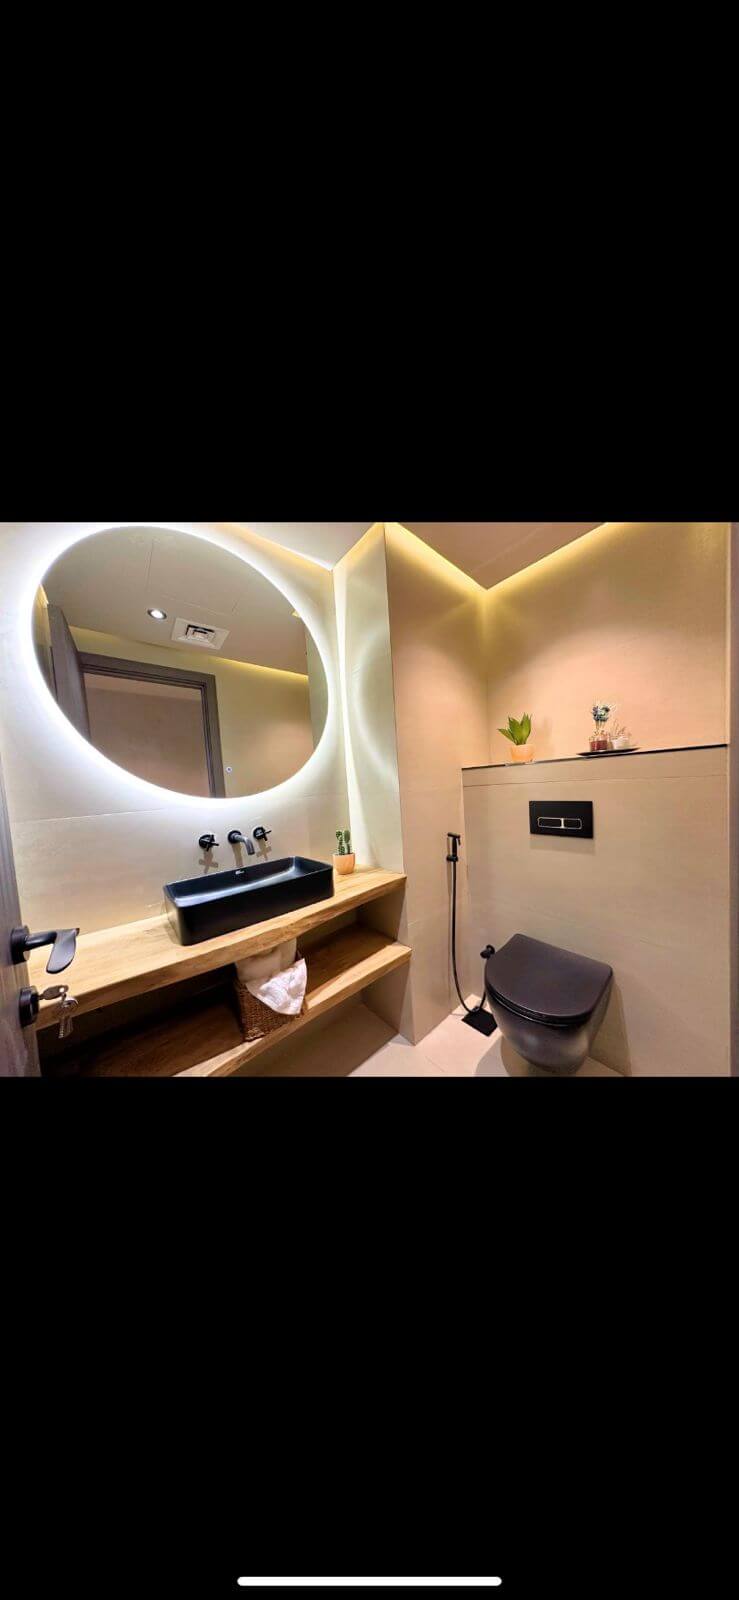 For sale a luxurious furnished apartment in Dubai | للبيع شقة مفروشة فخمة في دبي